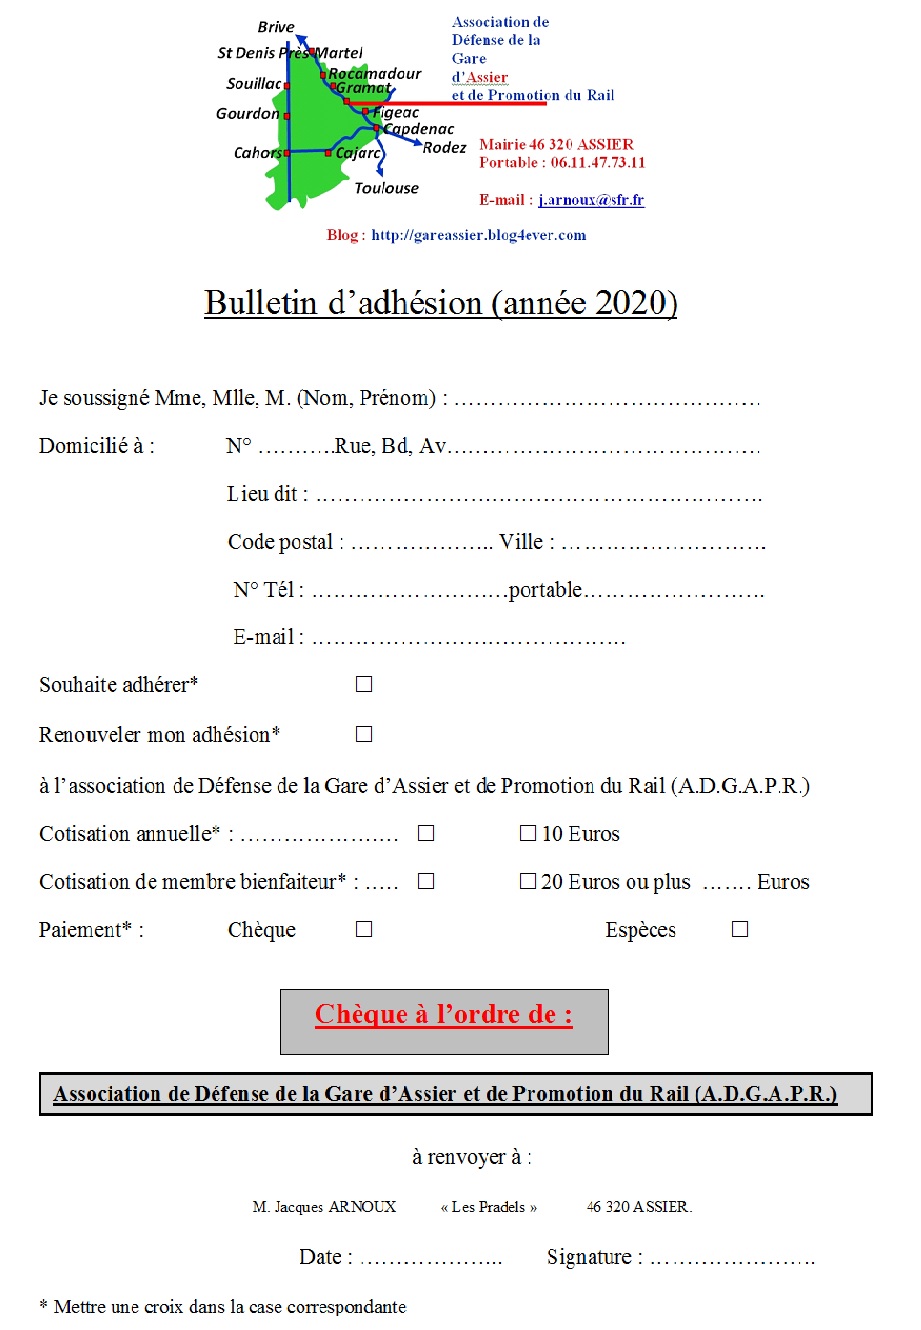 Bulletin d'adhésion 2020.jpg